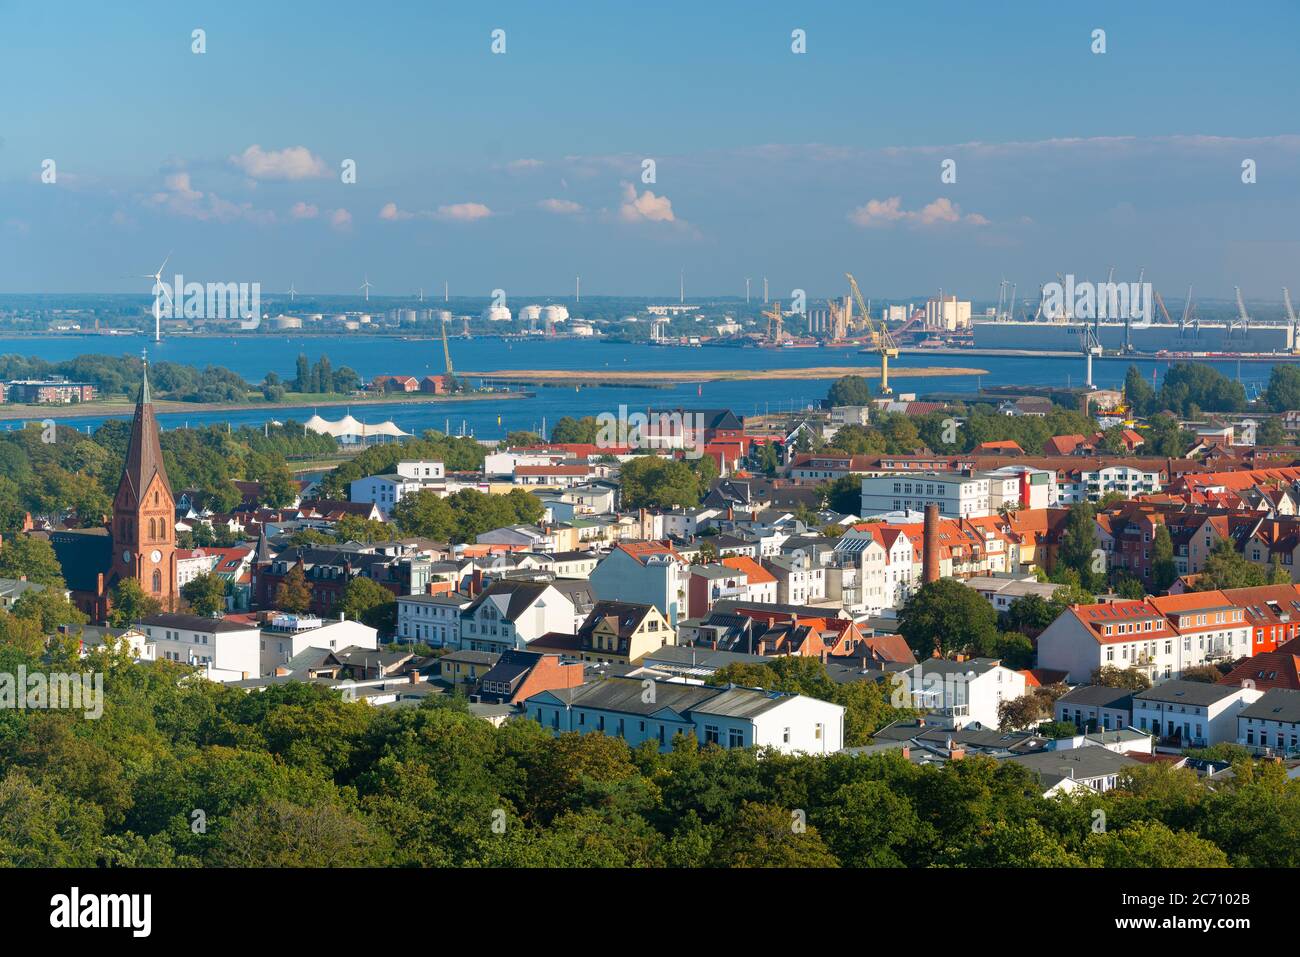 Warnemunde, Germany cityscape on the Baltic Sea. Stock Photo